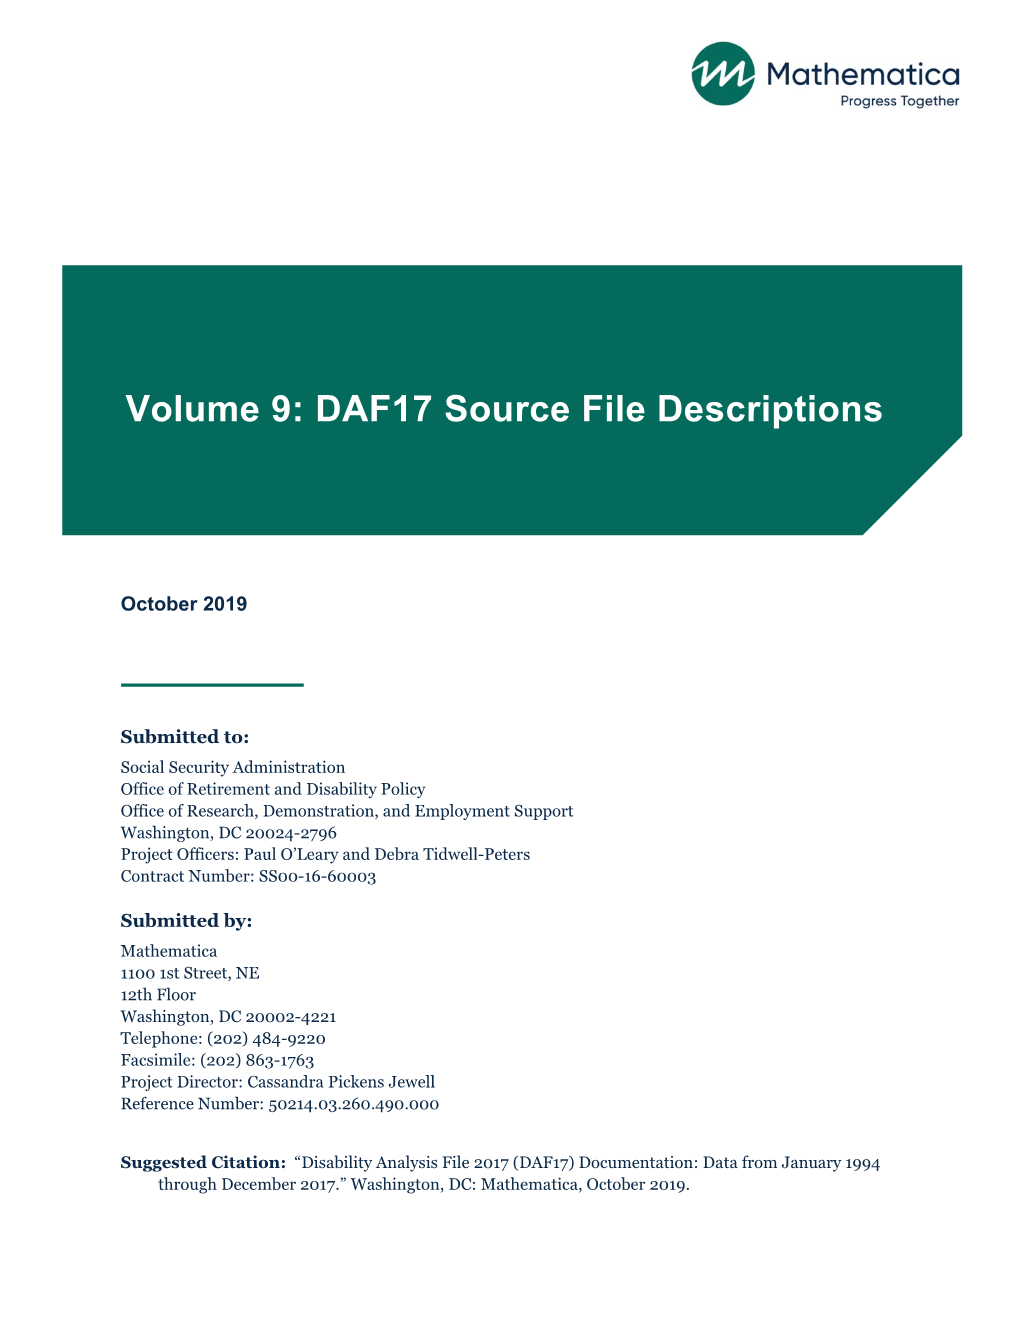 DAF17 Source File Descriptions